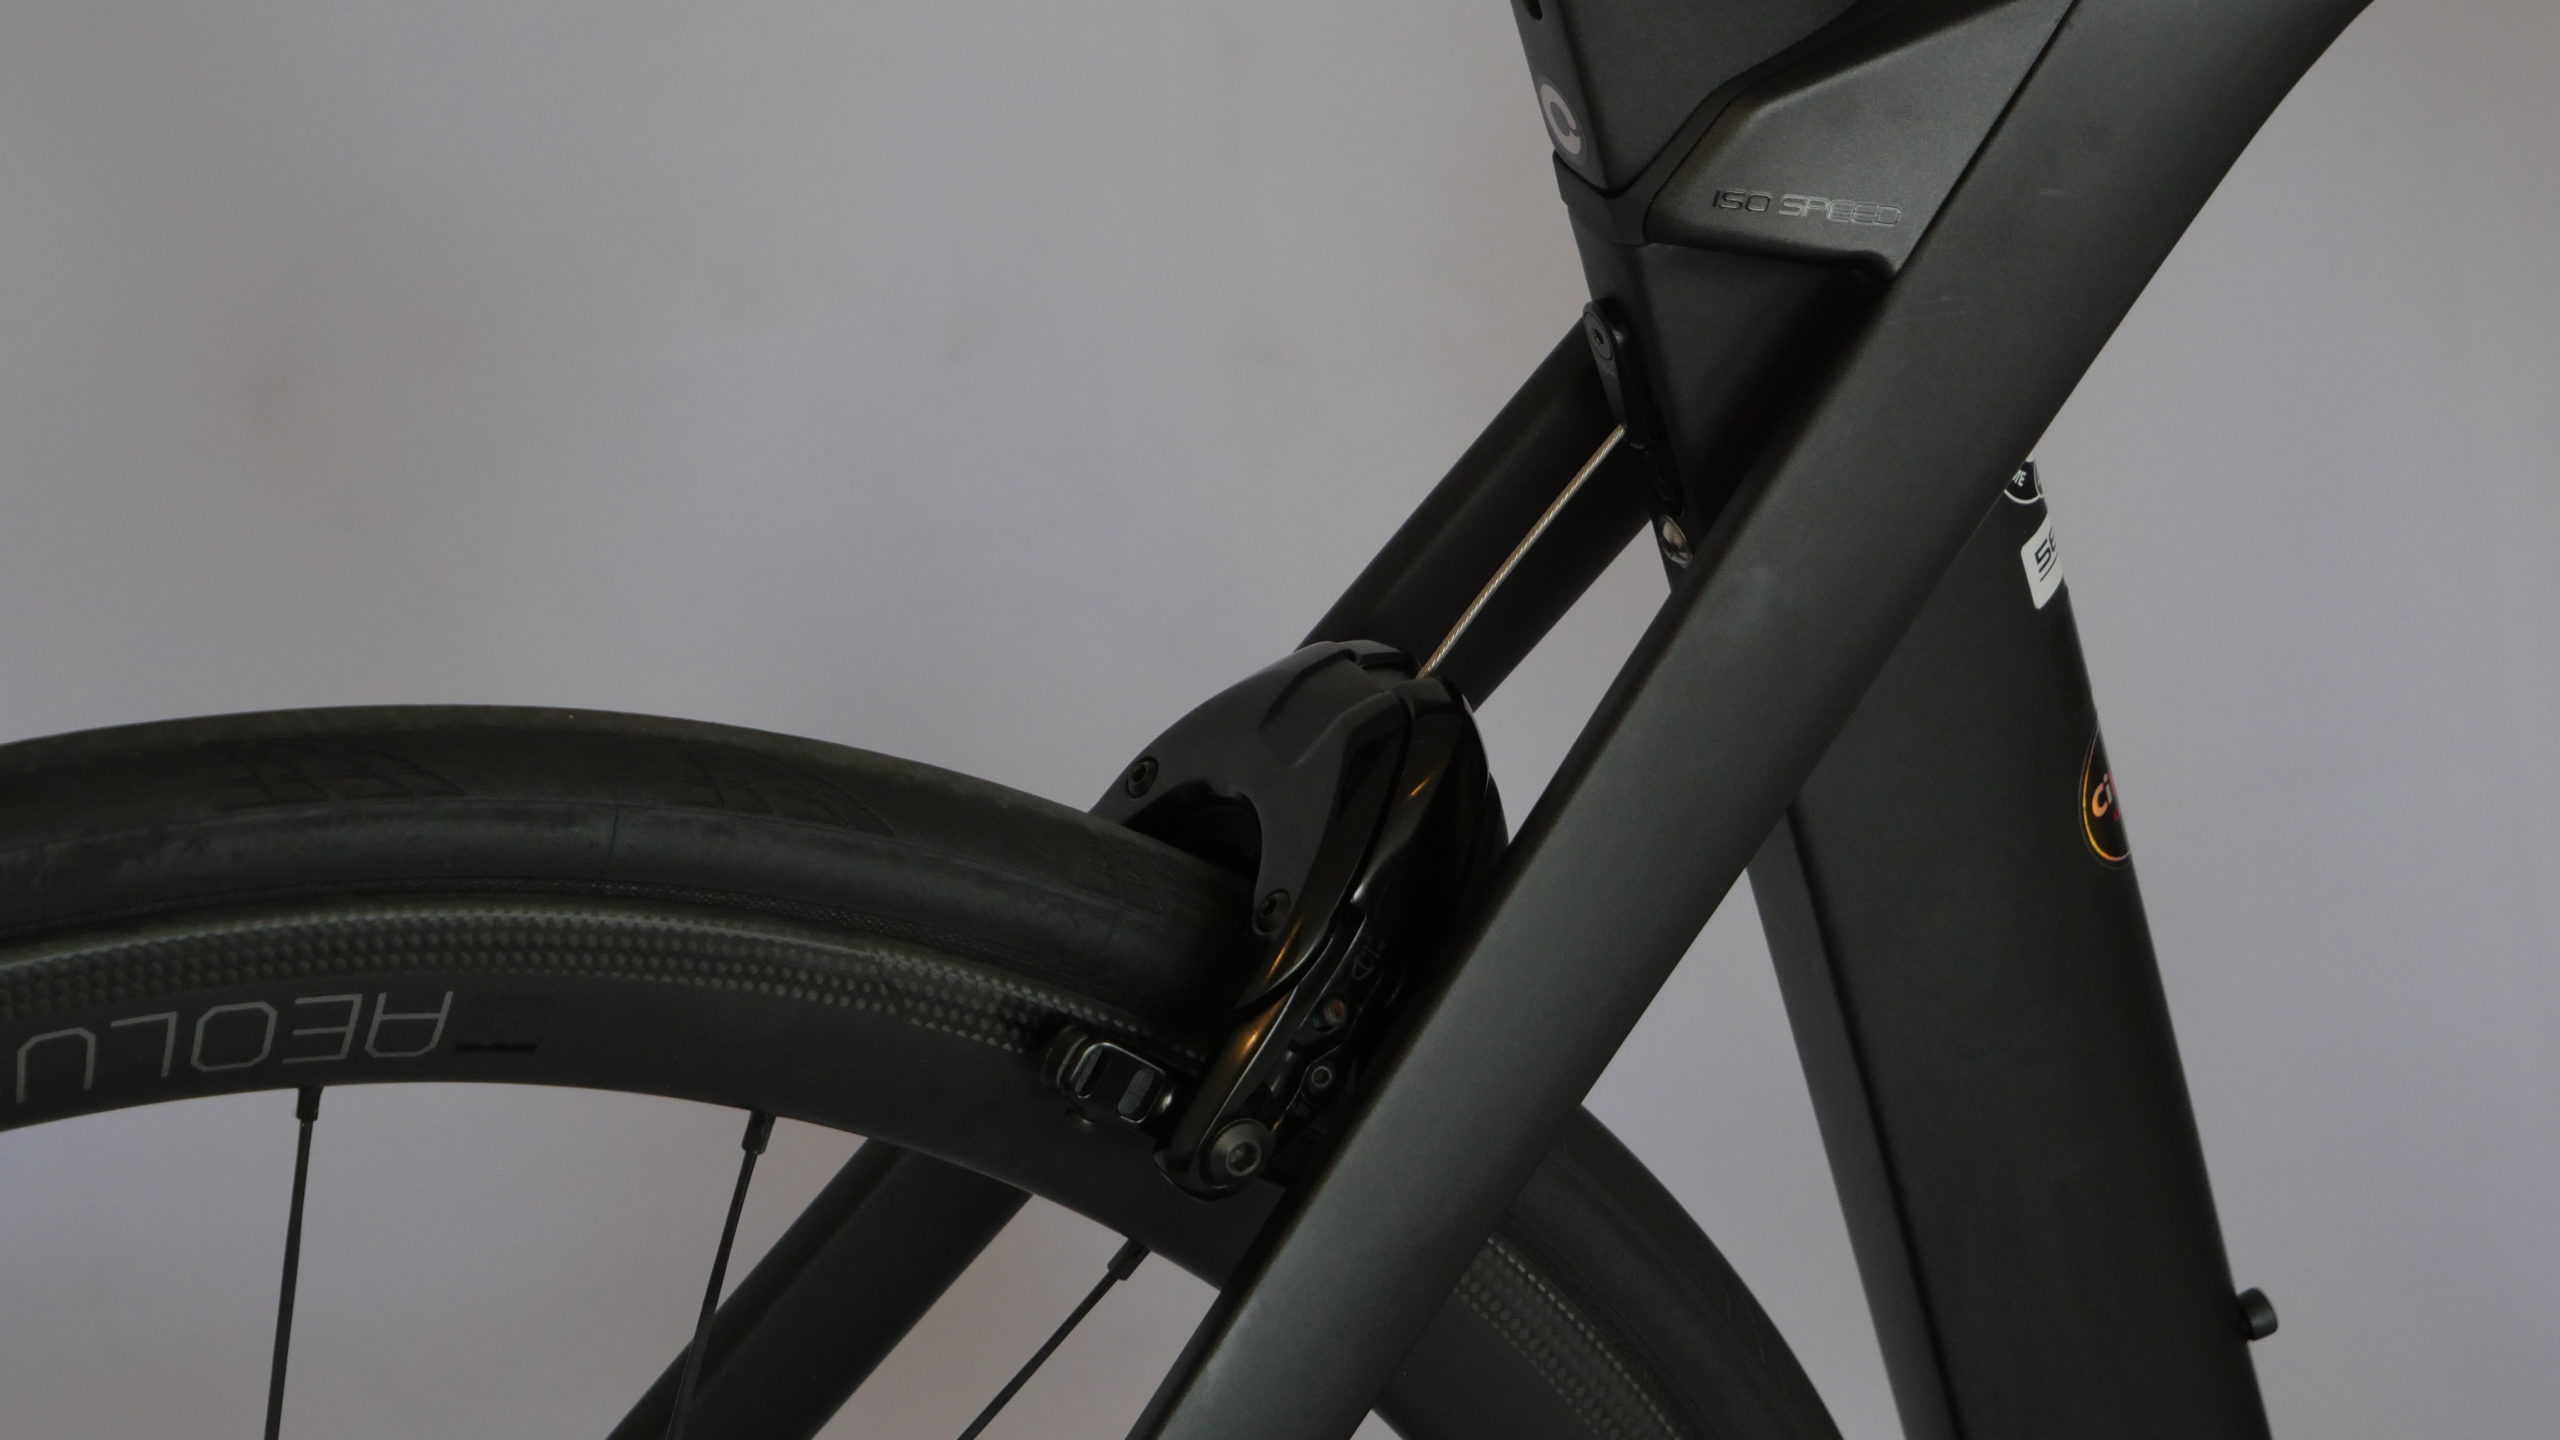 Road Bike Trek Madone SLR 6 Shimano Ultegra Noir / attributes.colorMarketing.matte black